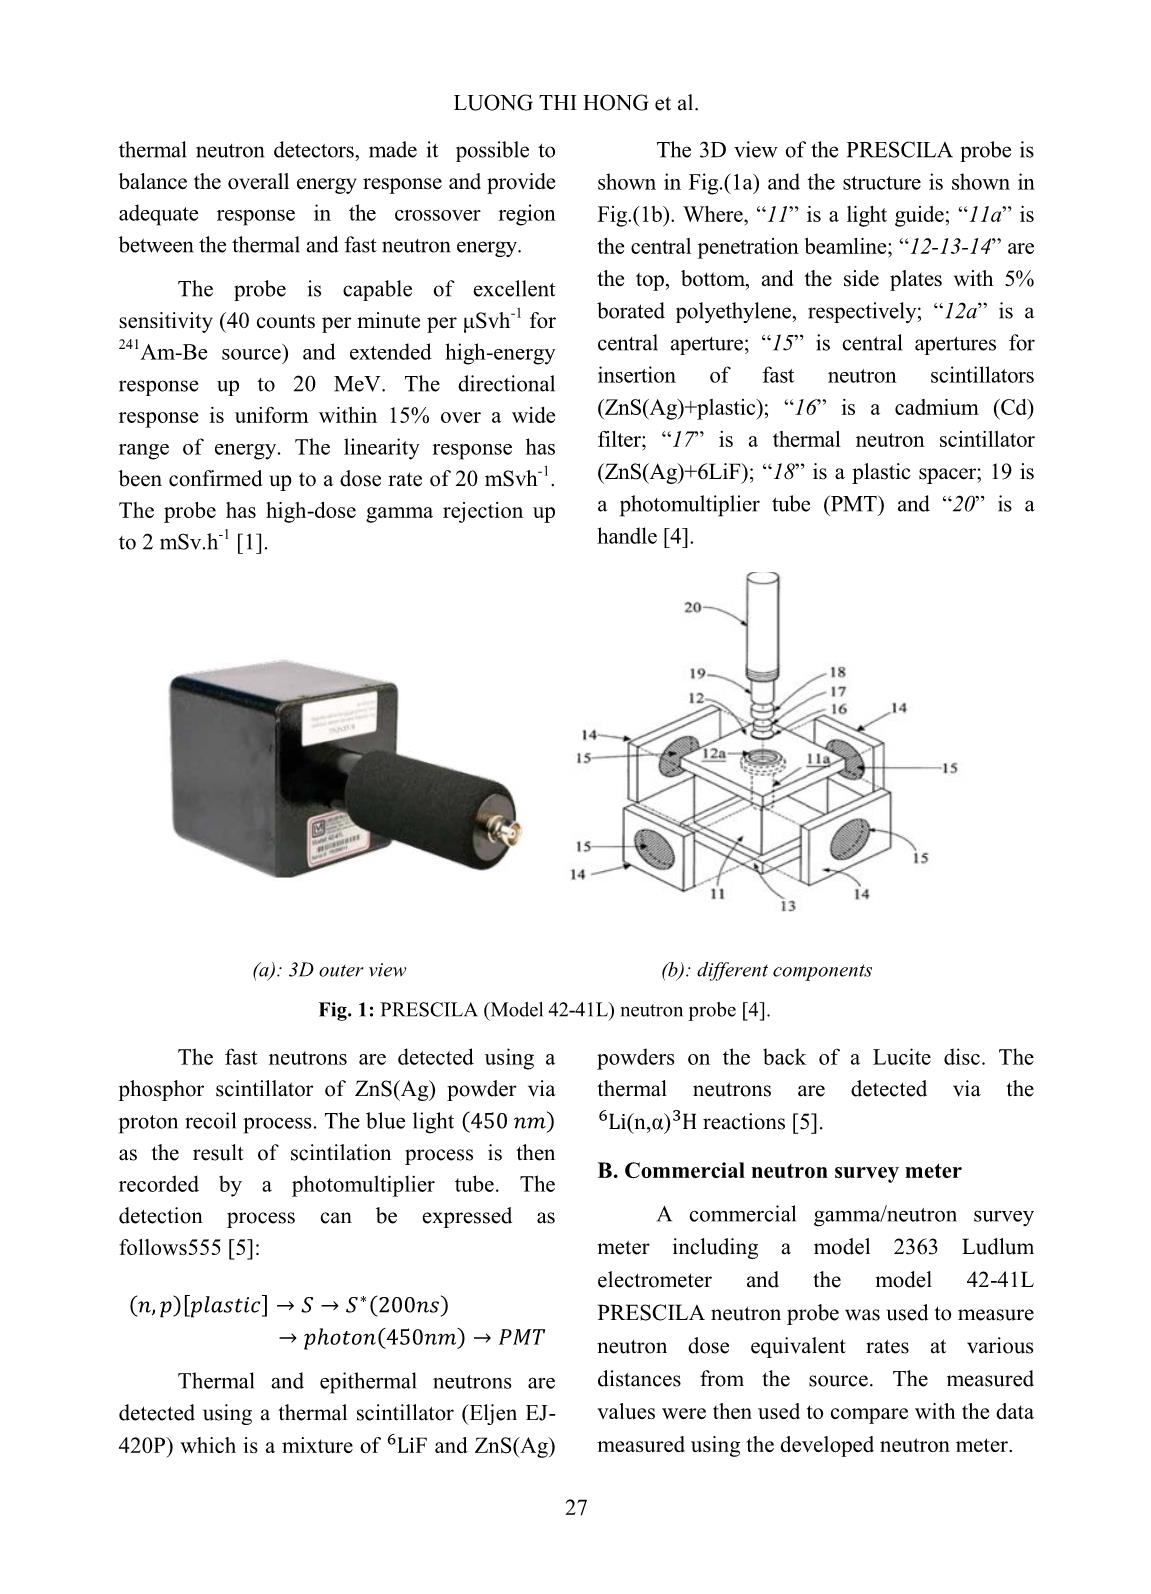 Development of neutron survey meter using prescila neutron probe trang 2